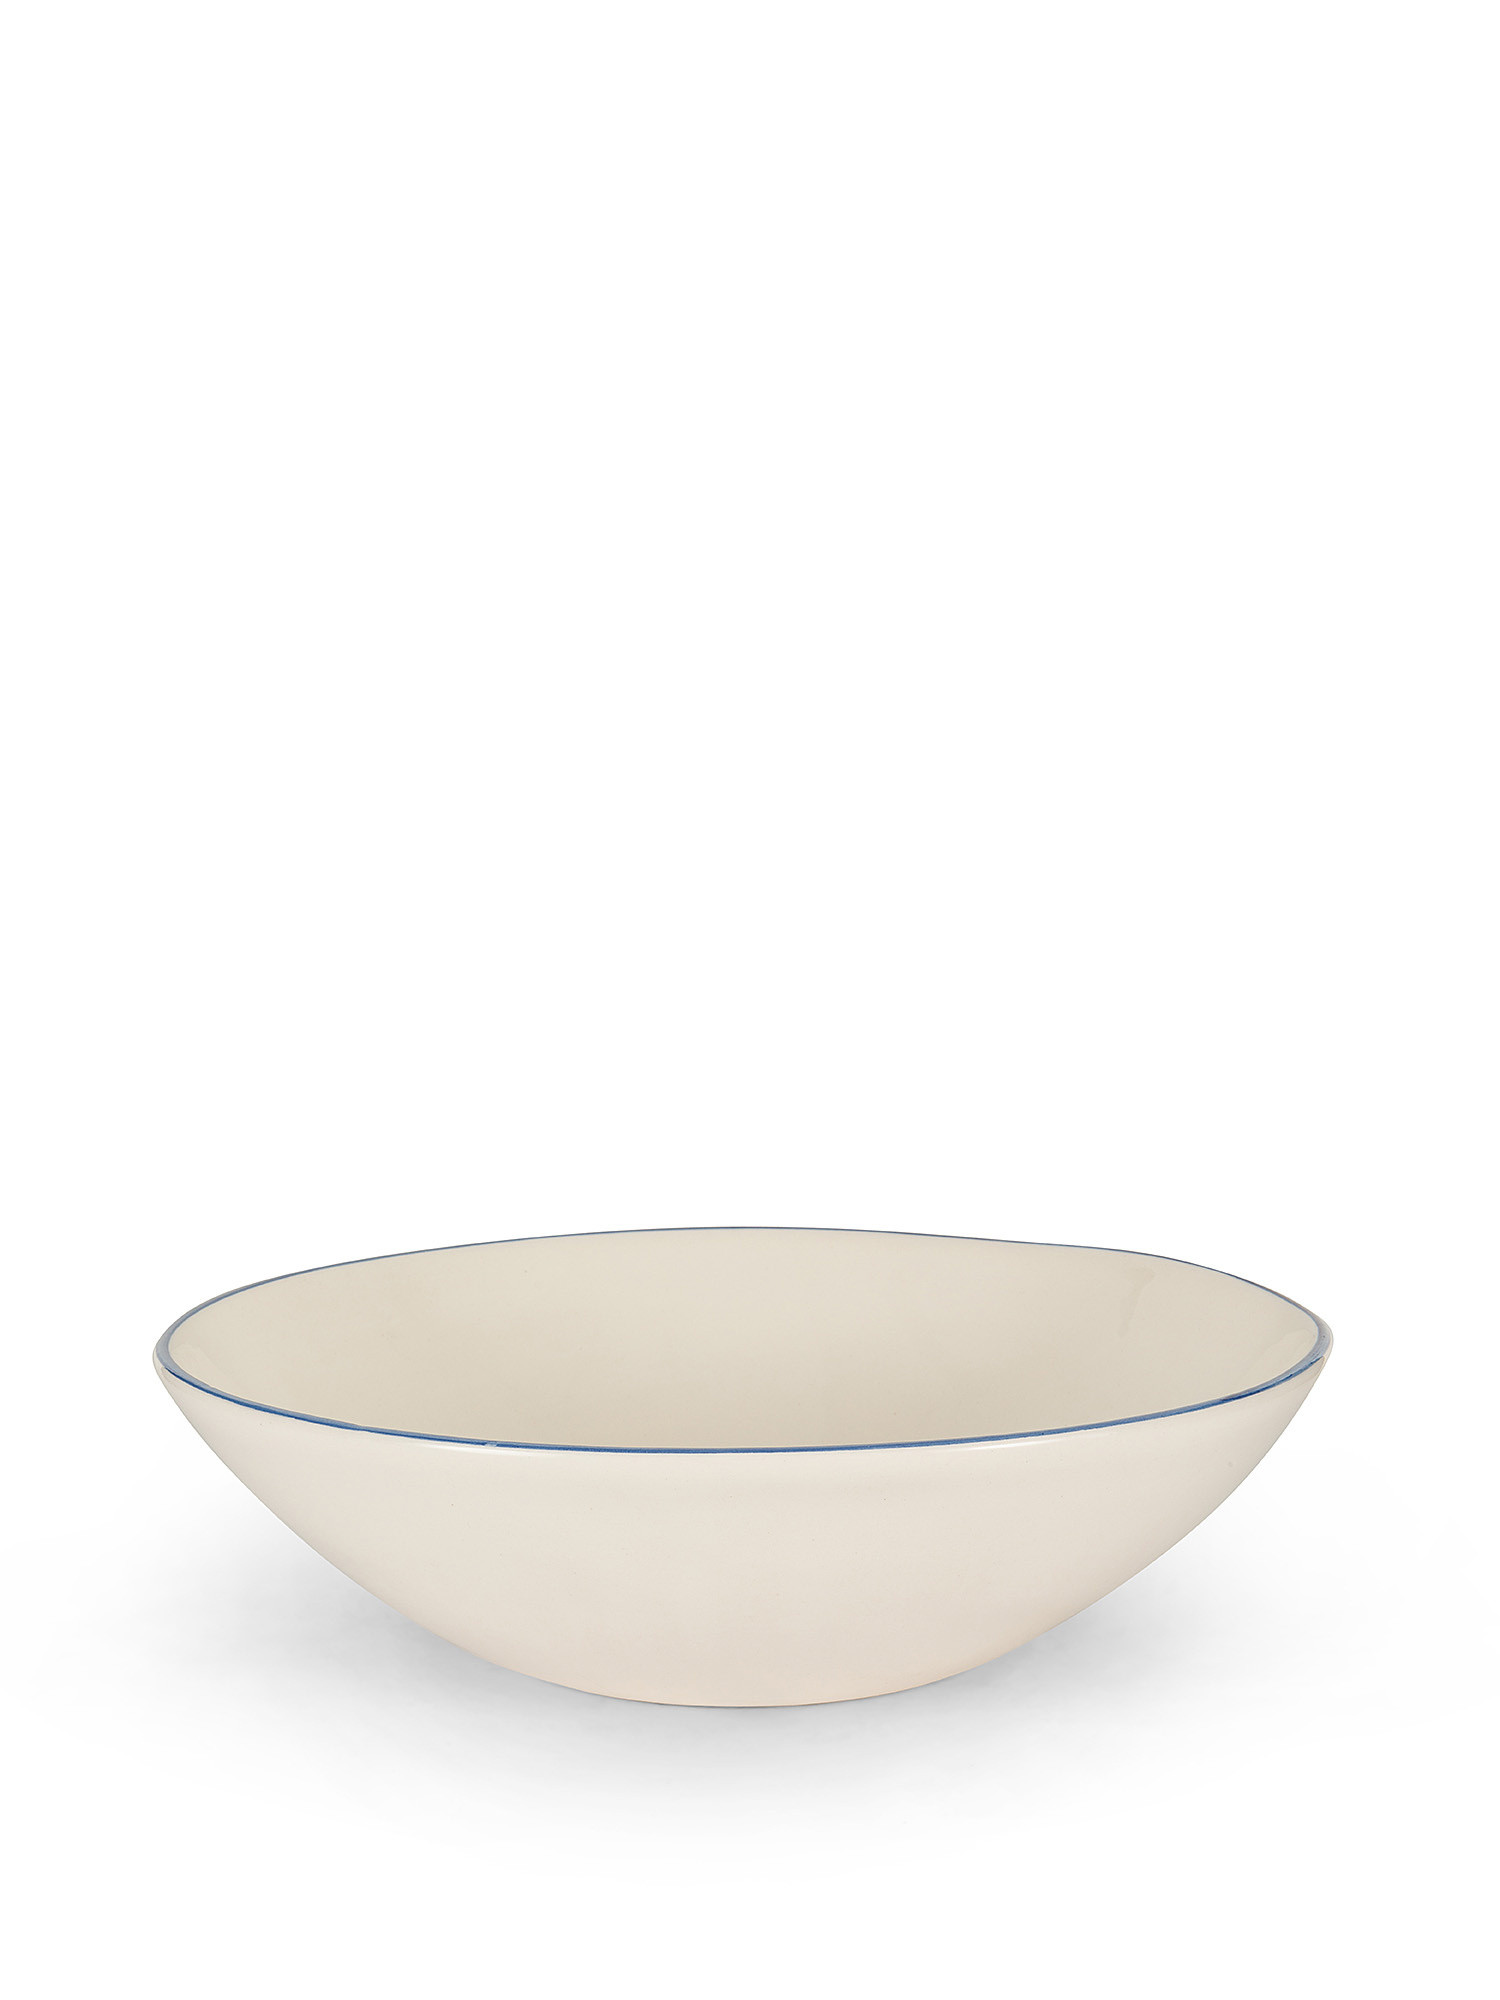 Ceramic salad bowl with fish decoration, White, large image number 0